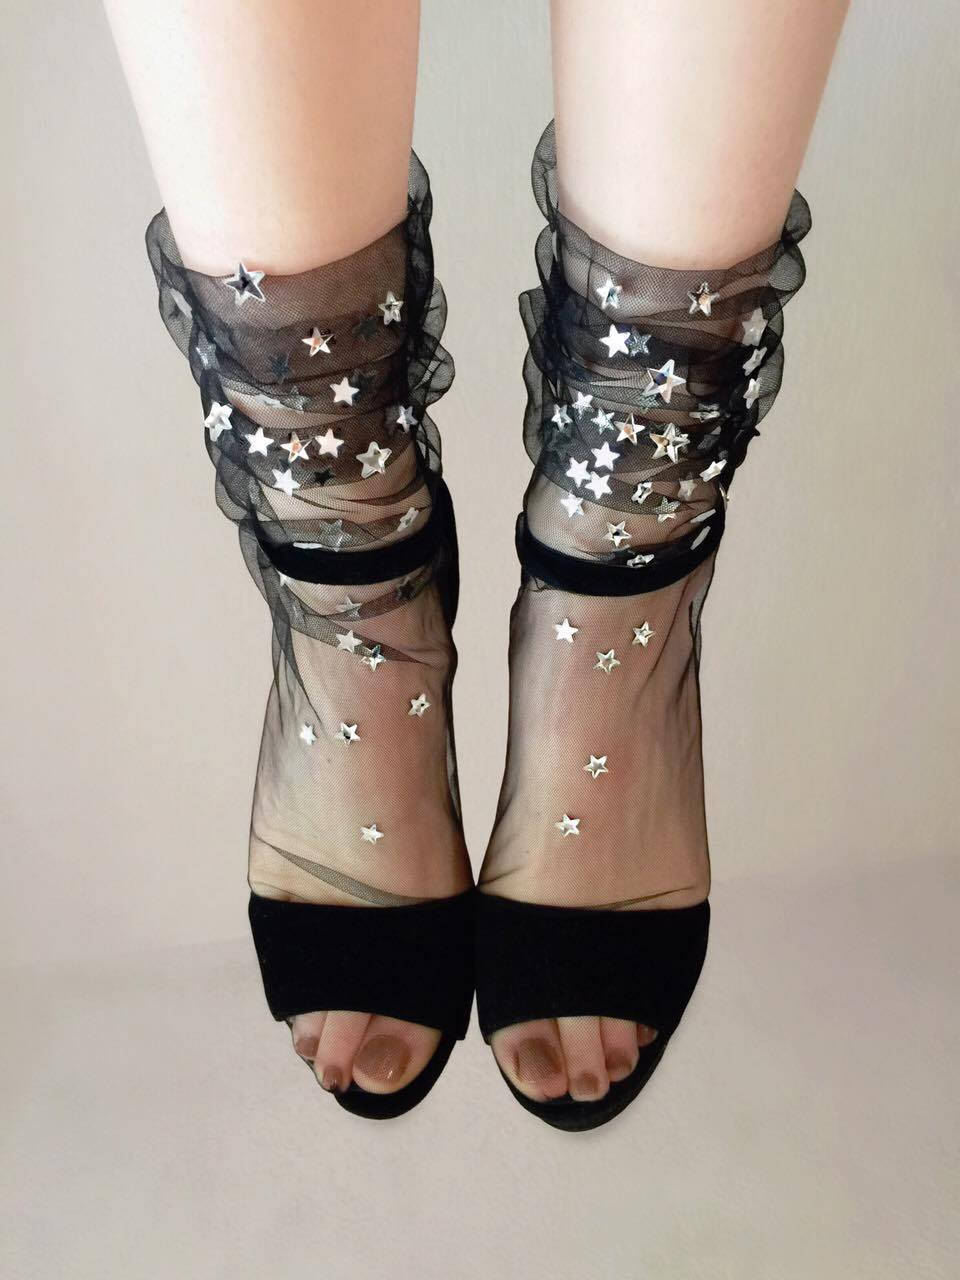 Lirika Matoshi Black Starry Tulle Socks $44.89